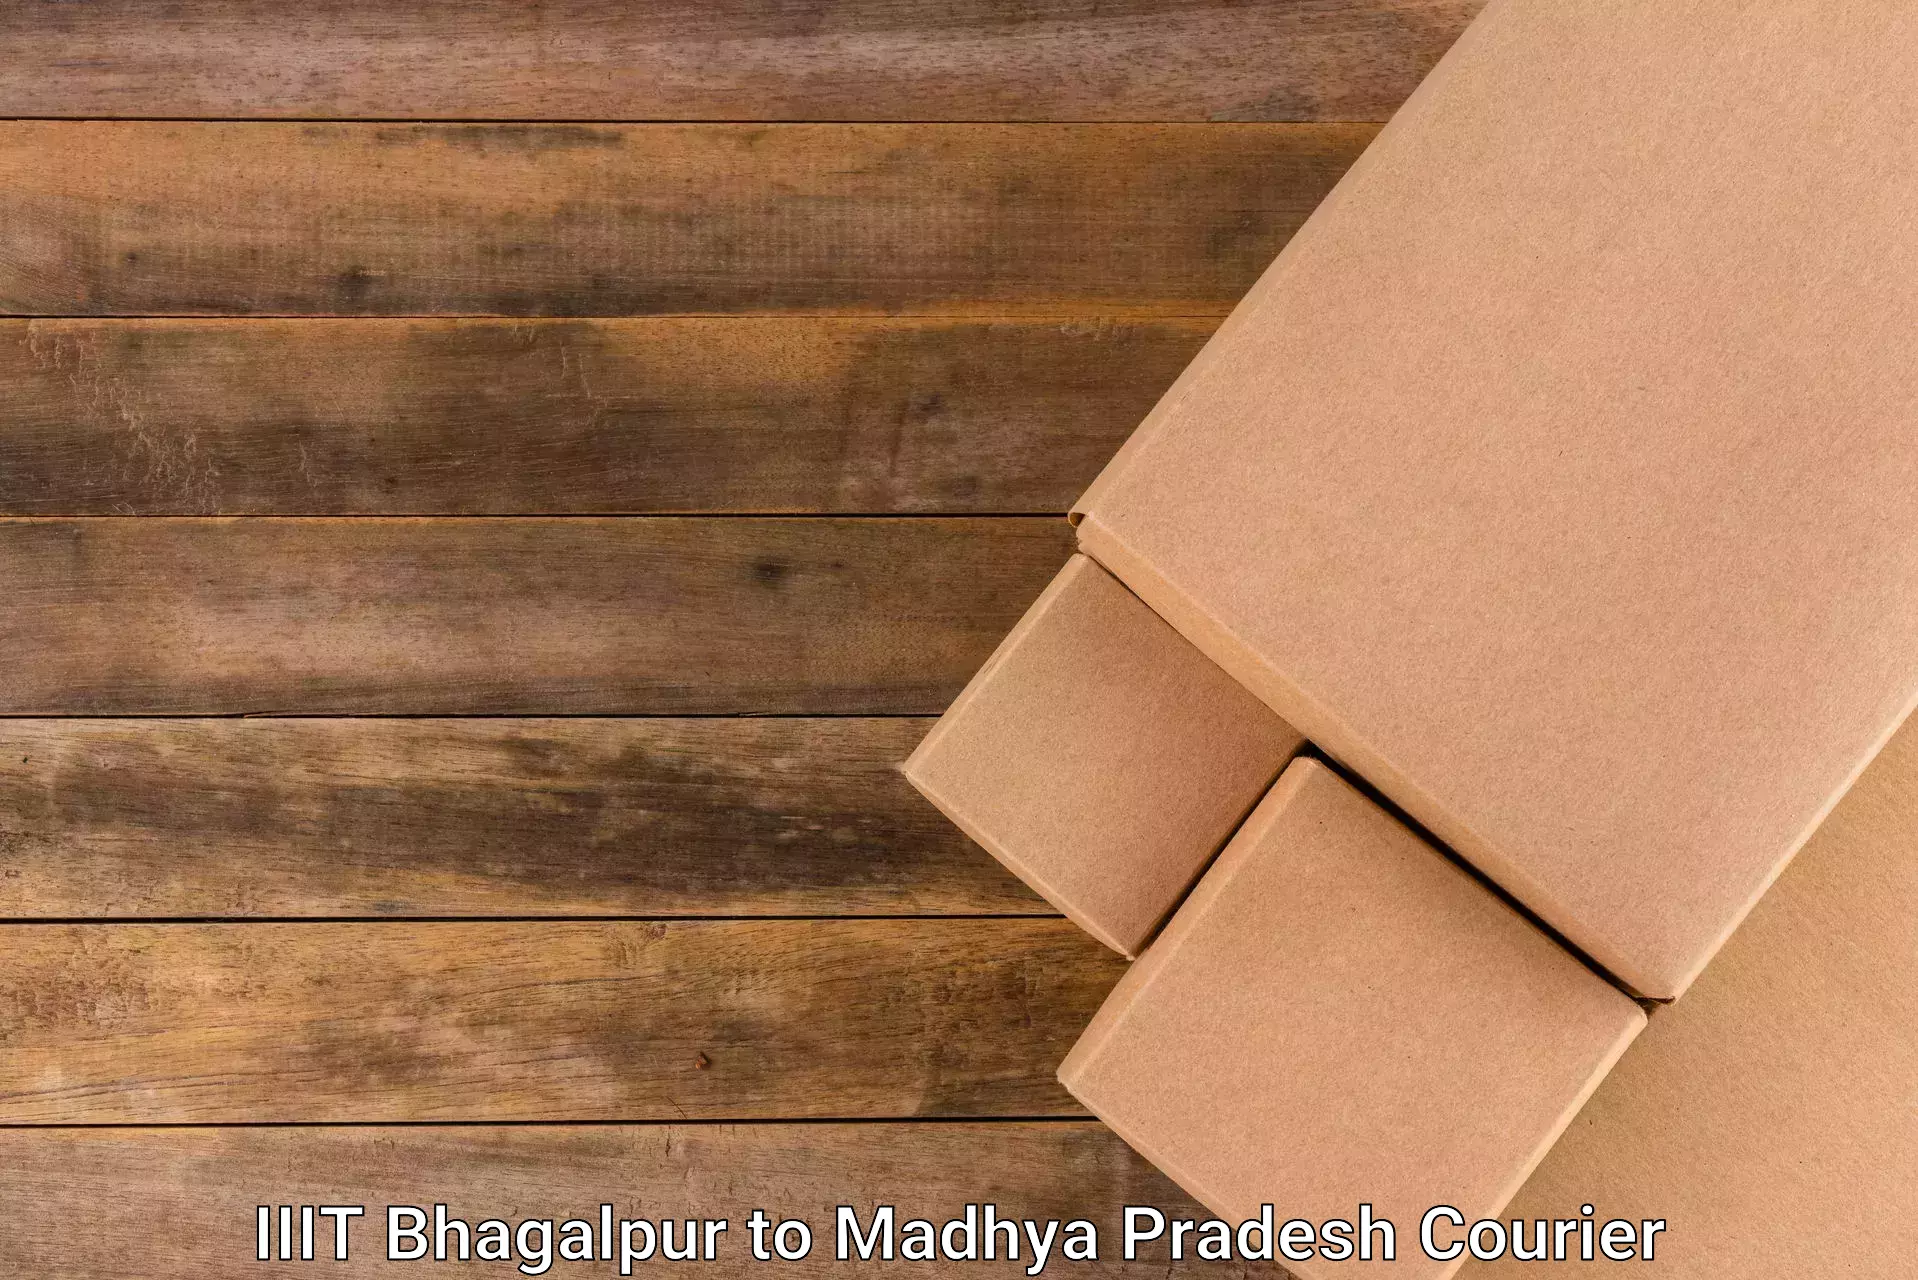 Small business couriers IIIT Bhagalpur to Ghatiya